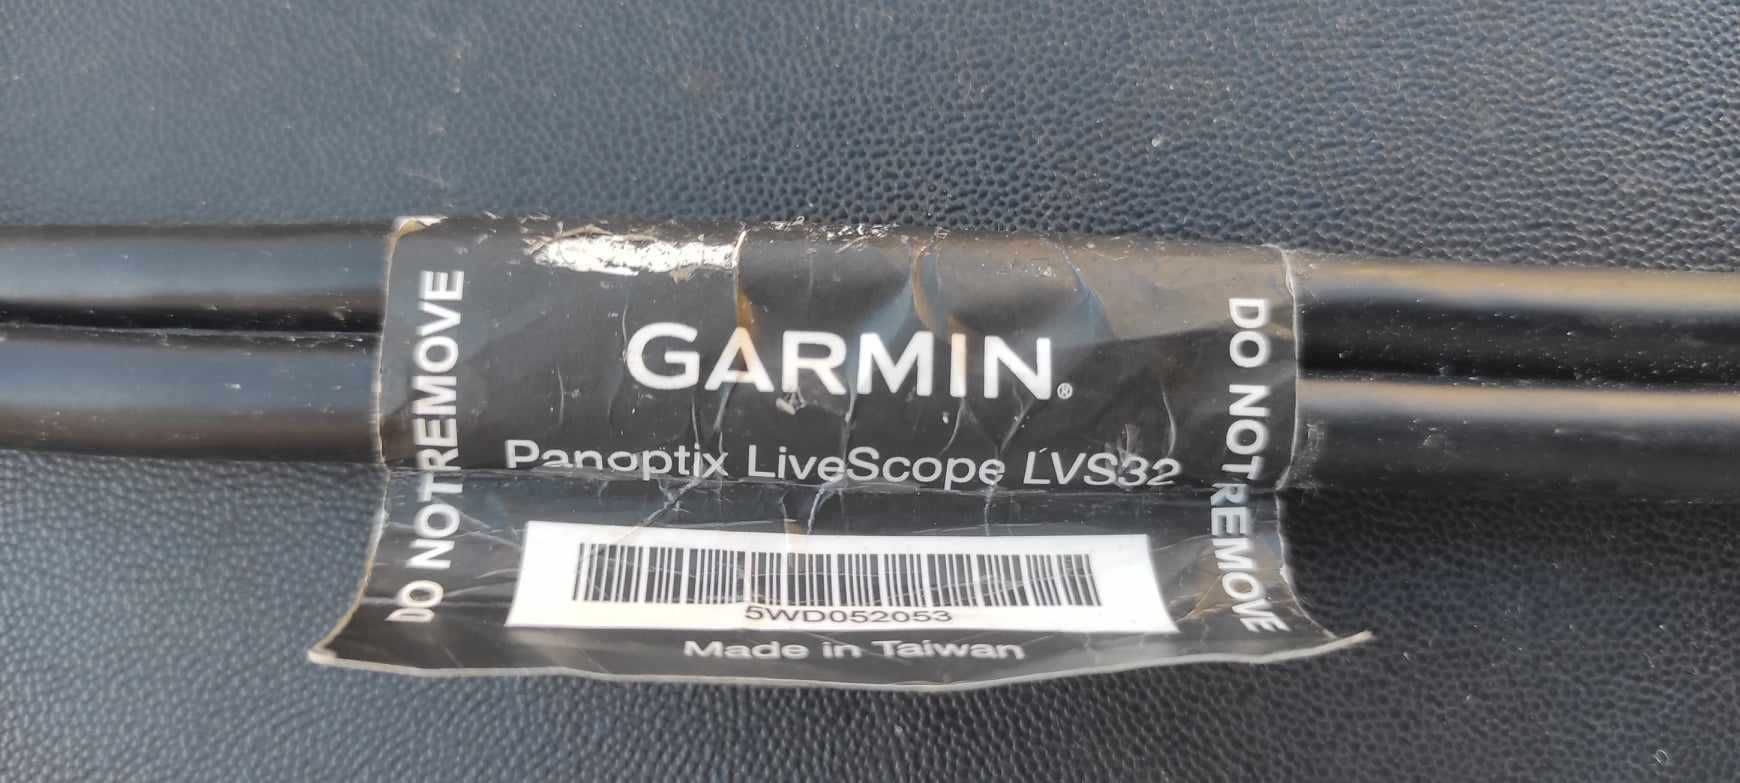 Garmin Panoptix LiveScope System LVS32